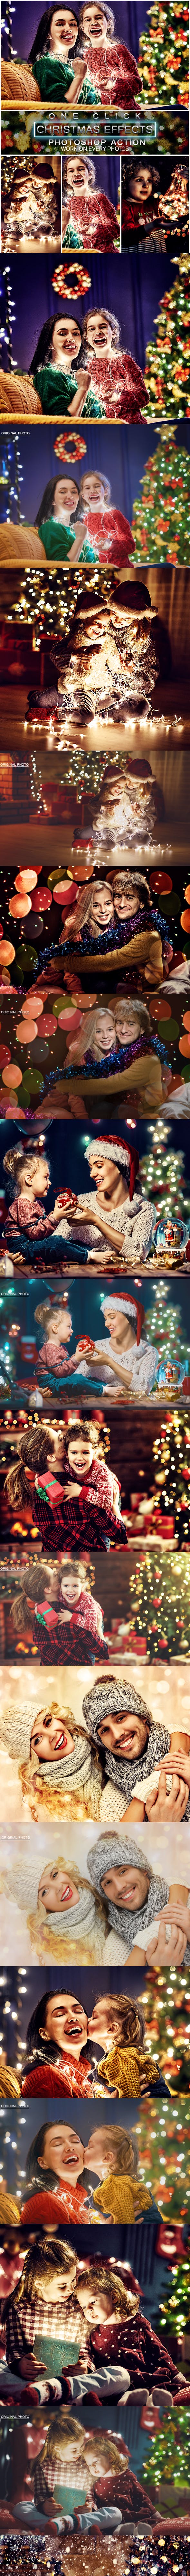 Christmas Photoshop Action